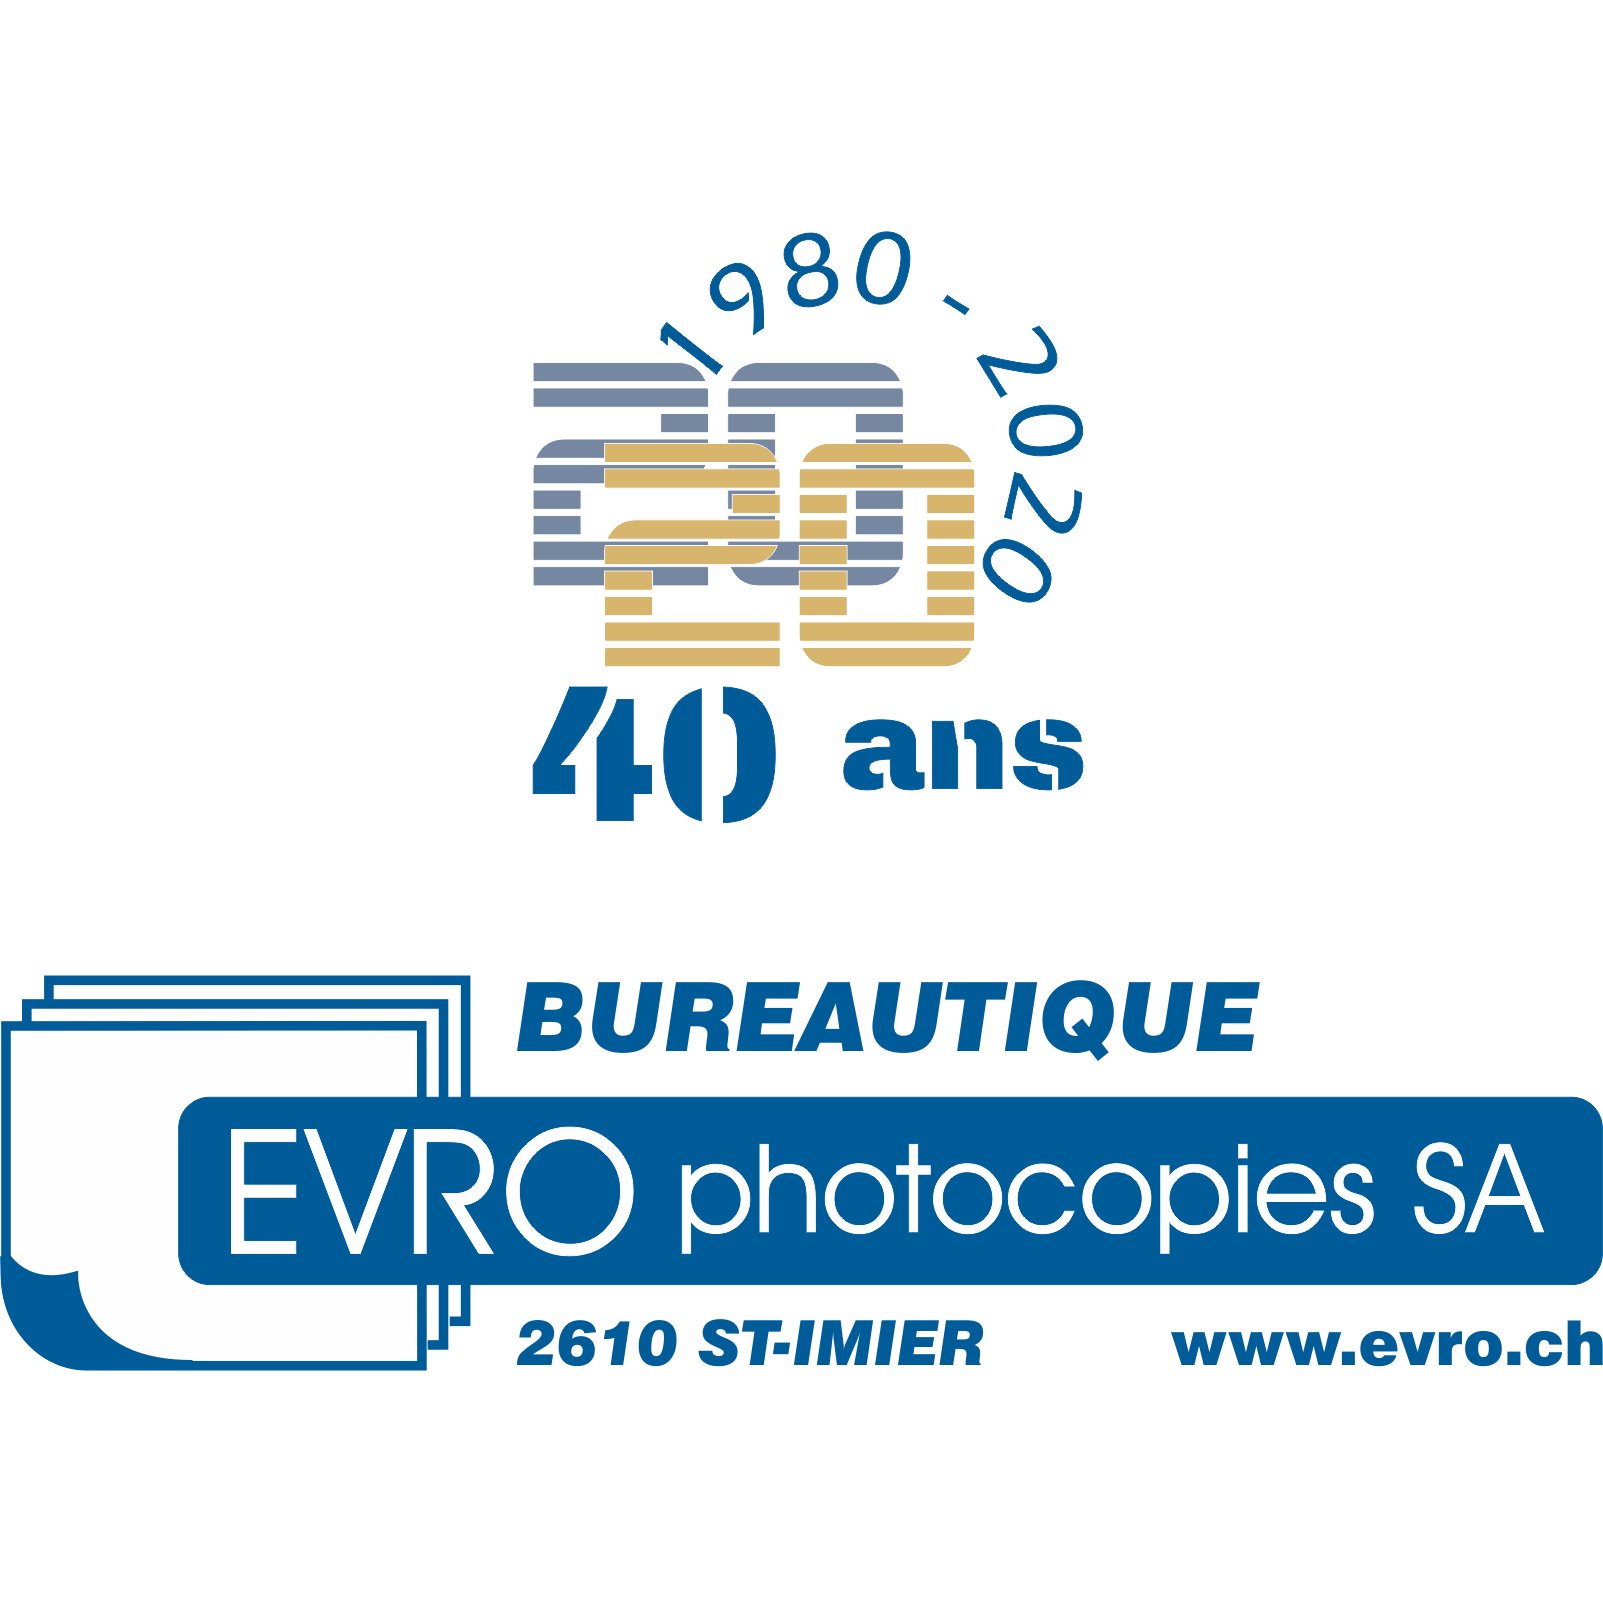 EVRO photocopies SA Logo